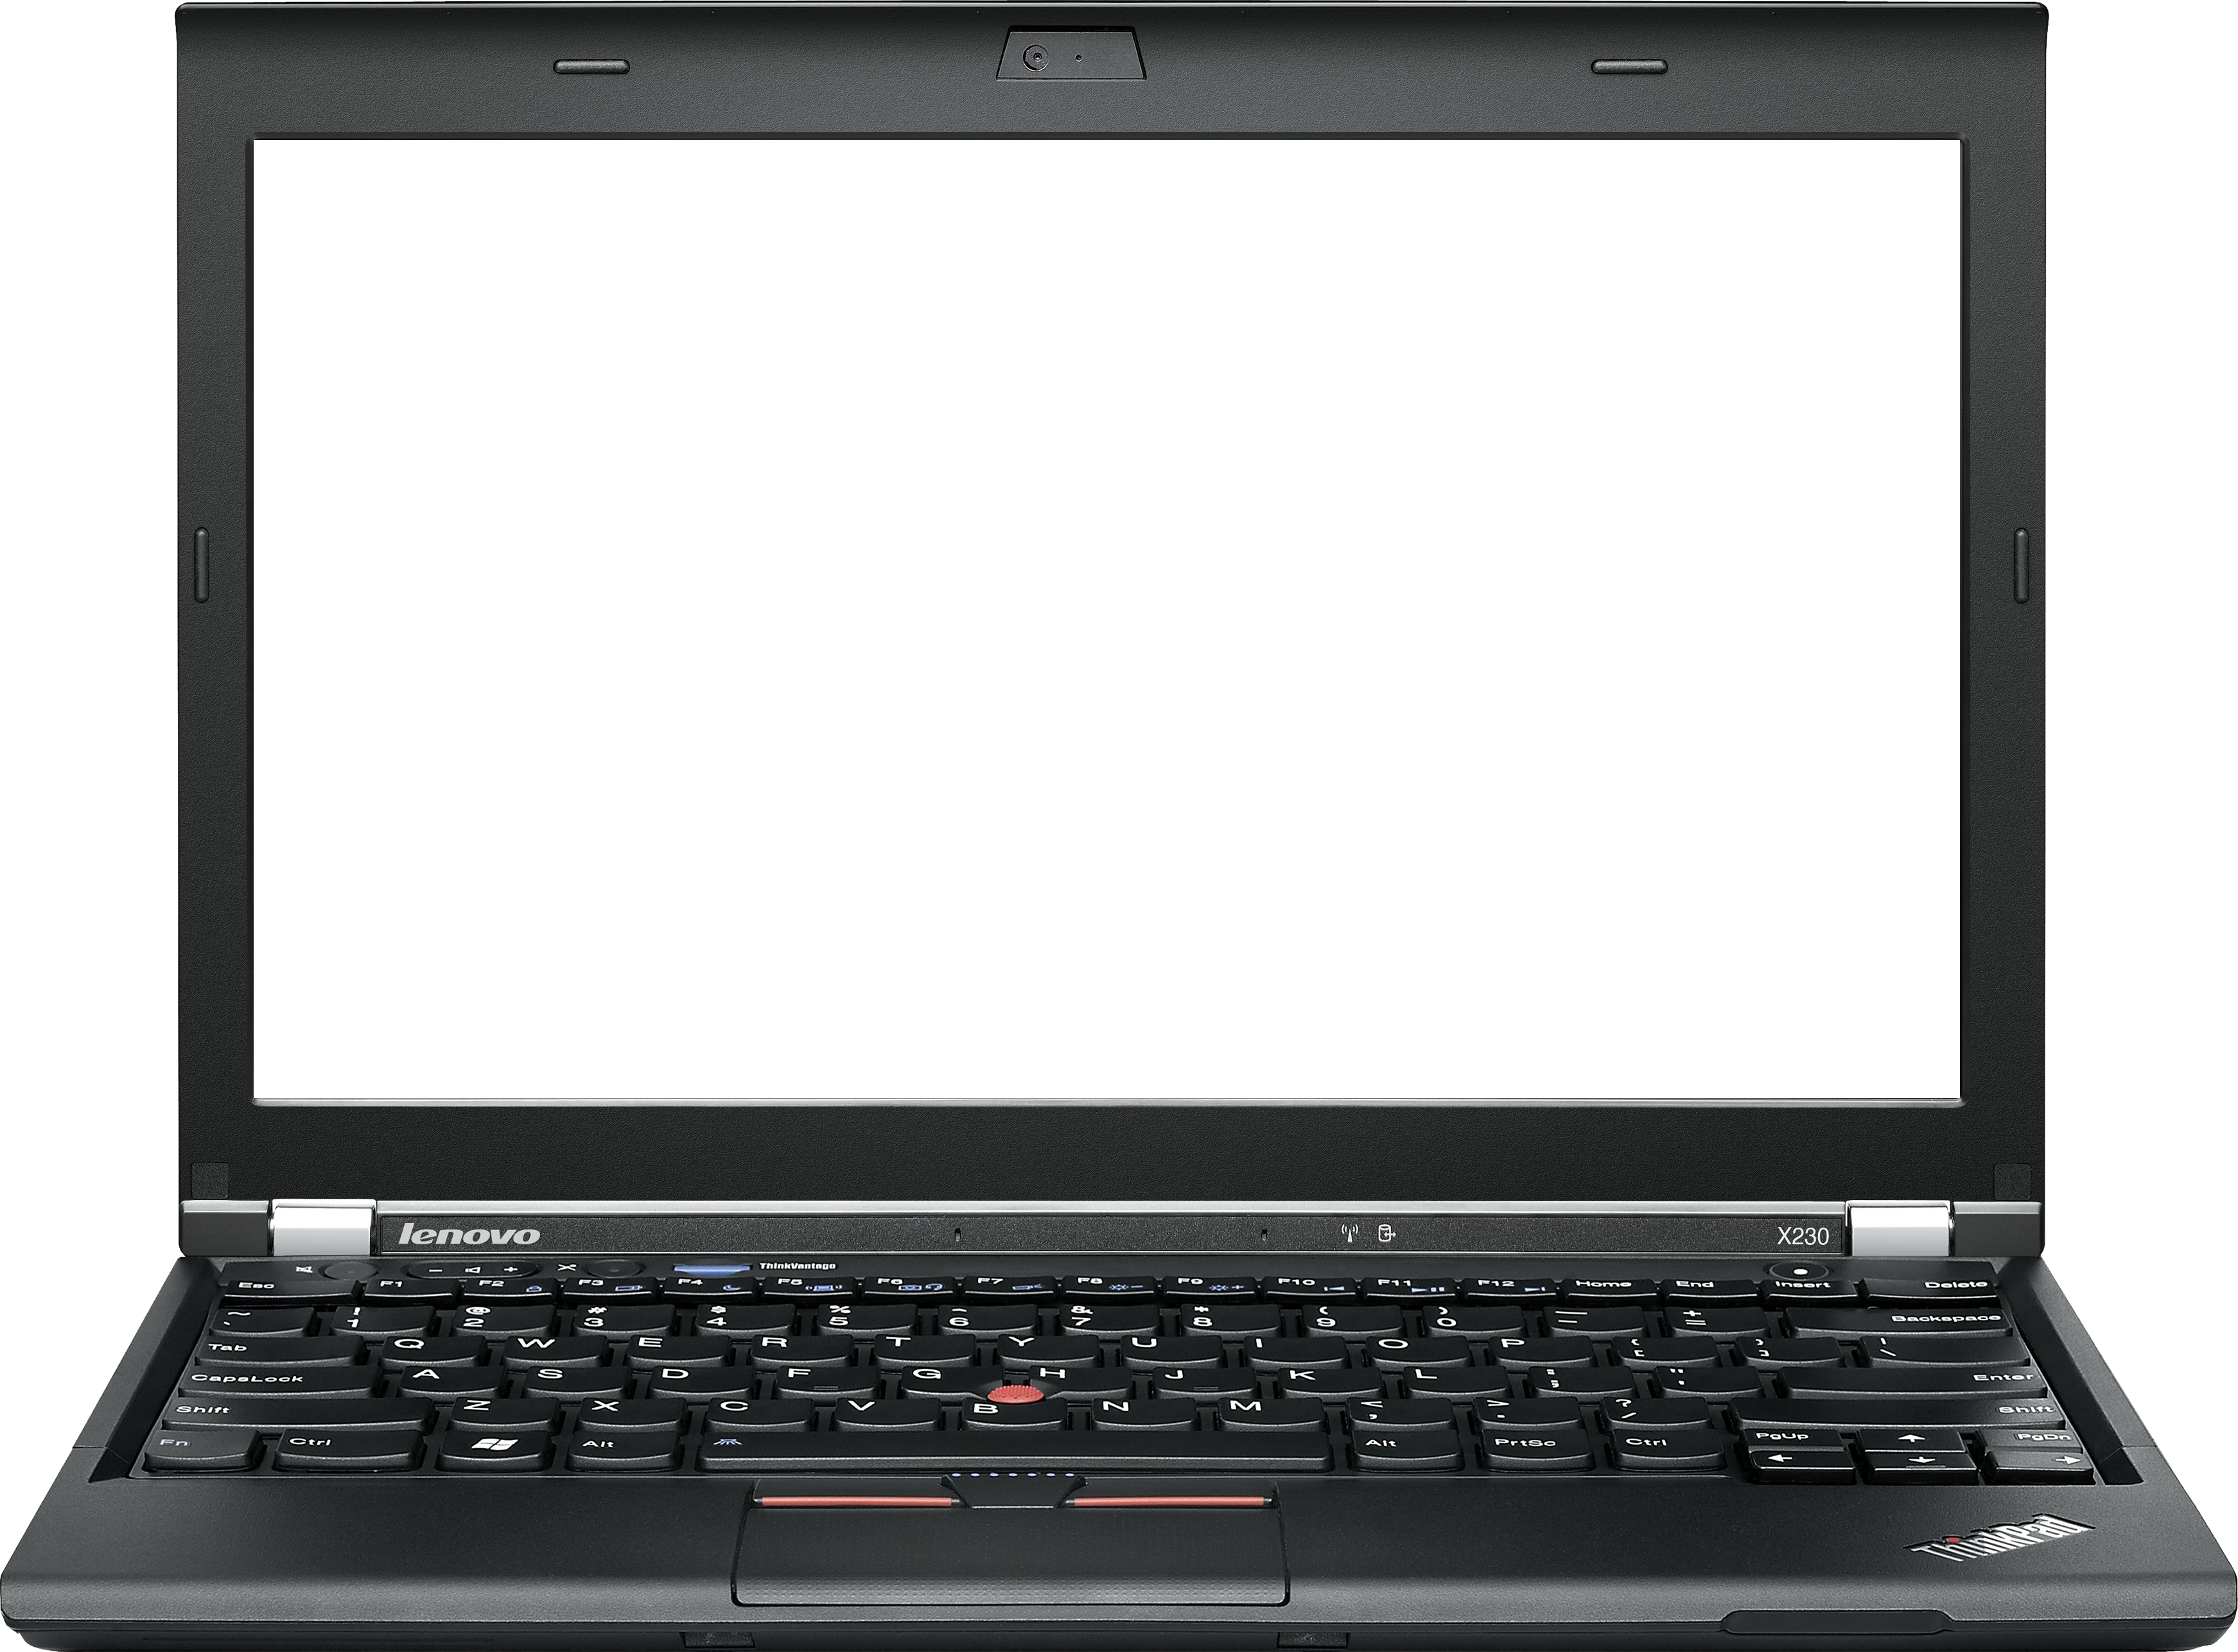 Картинка на монитор ноутбука. Lenovo THINKPAD ПК. Lenovo THINKPAD x200t. Lenovo THINKPAD x131e. Lenovo THINKPAD т560.